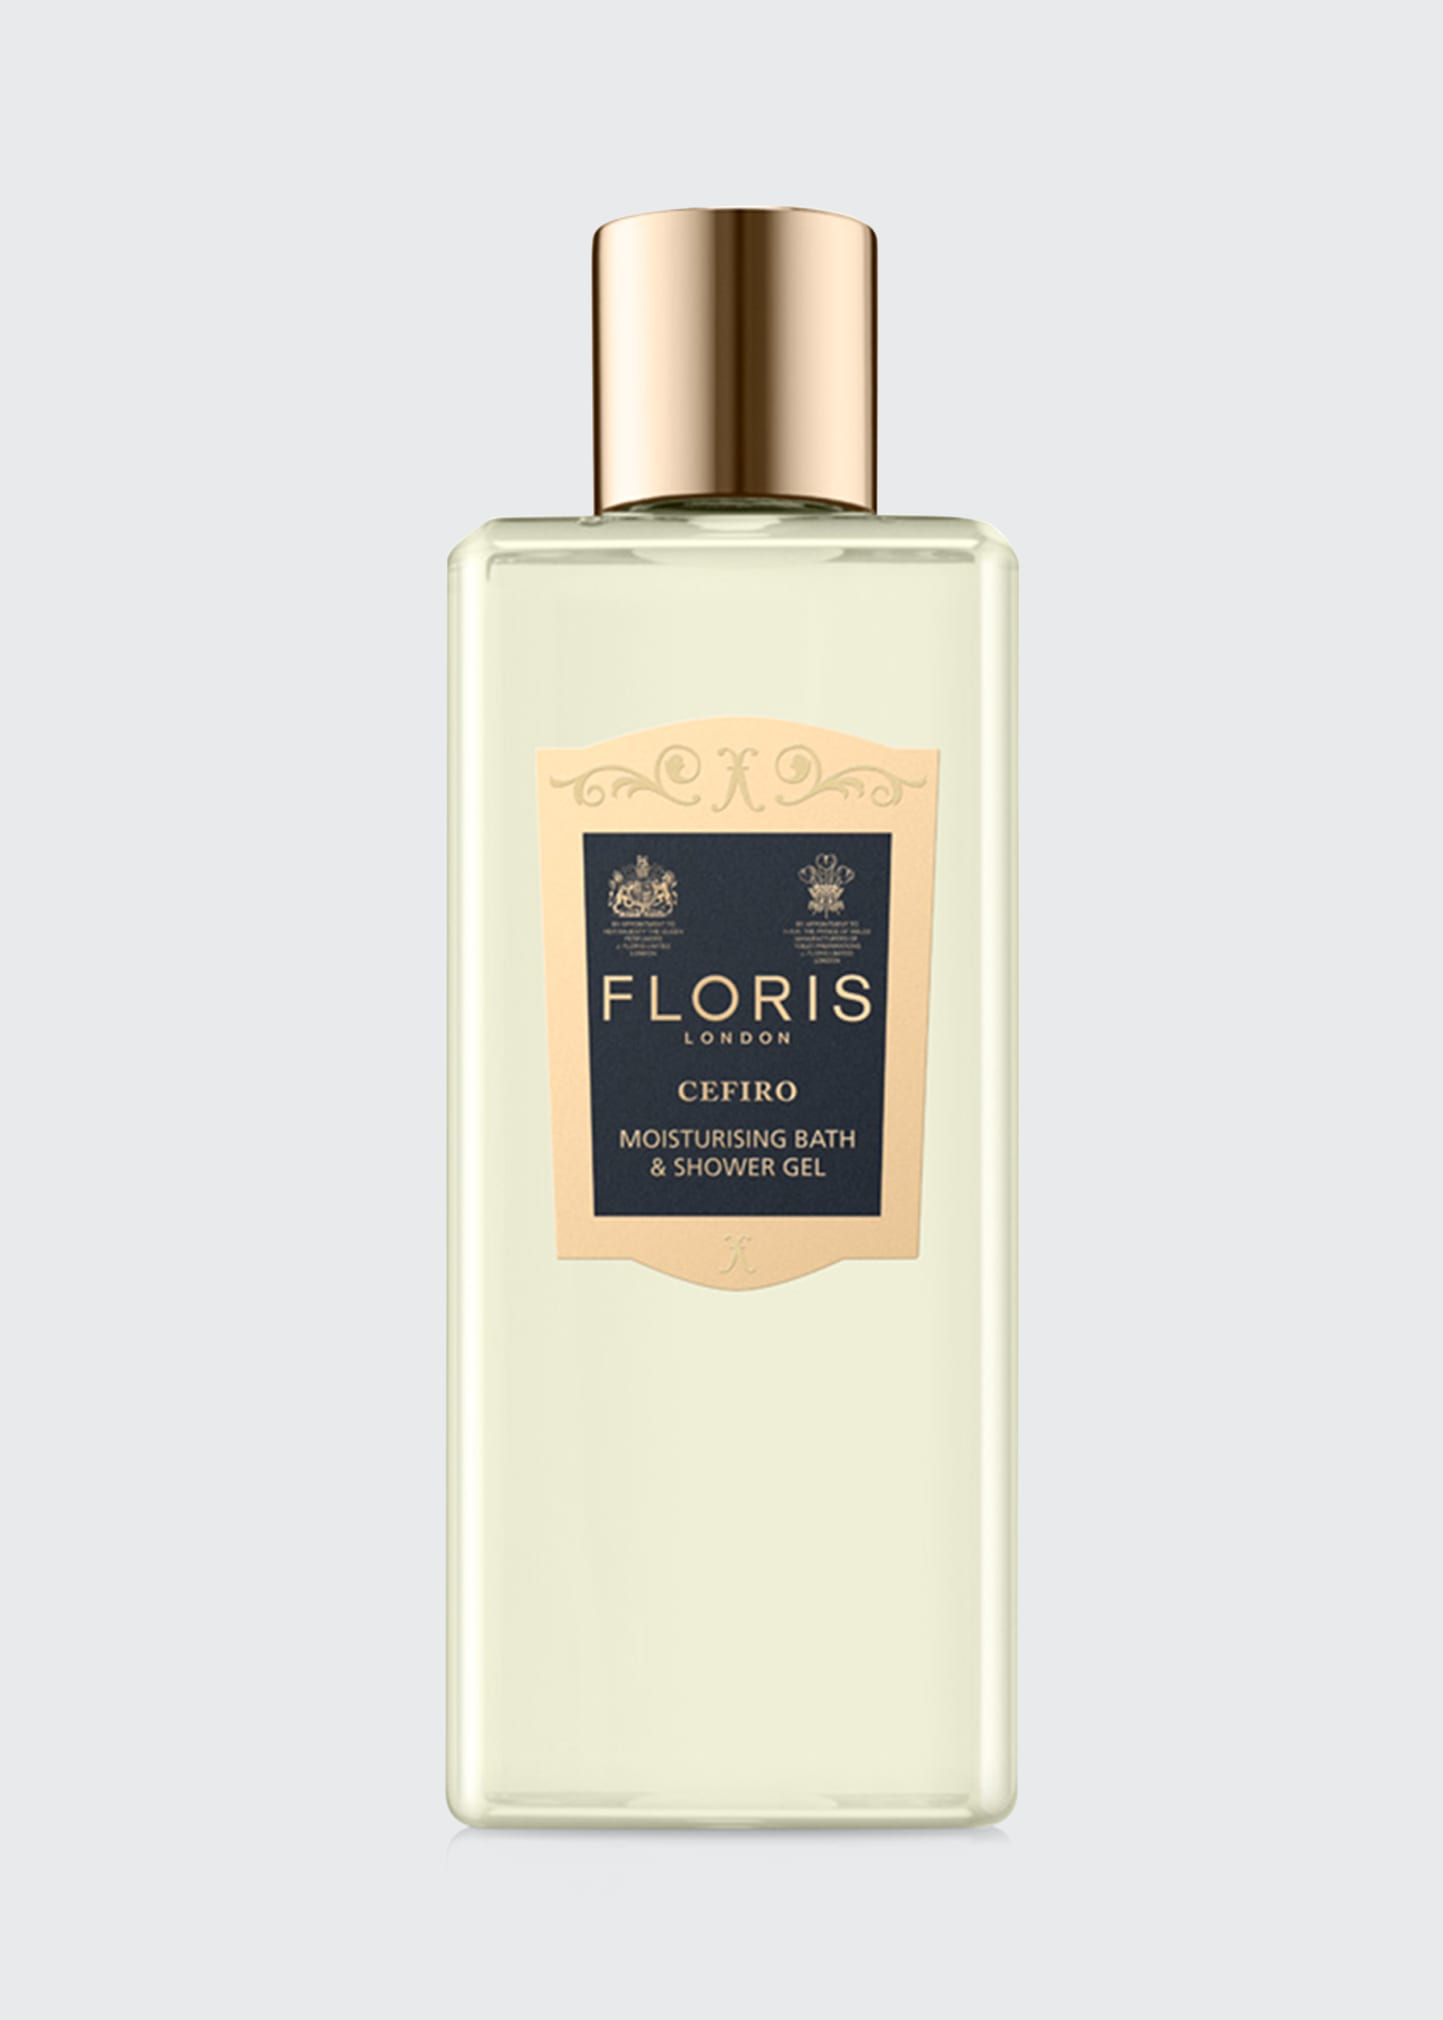 Floris London 8.4 oz. Cefiro Moisturizing Bath & Shower Gel